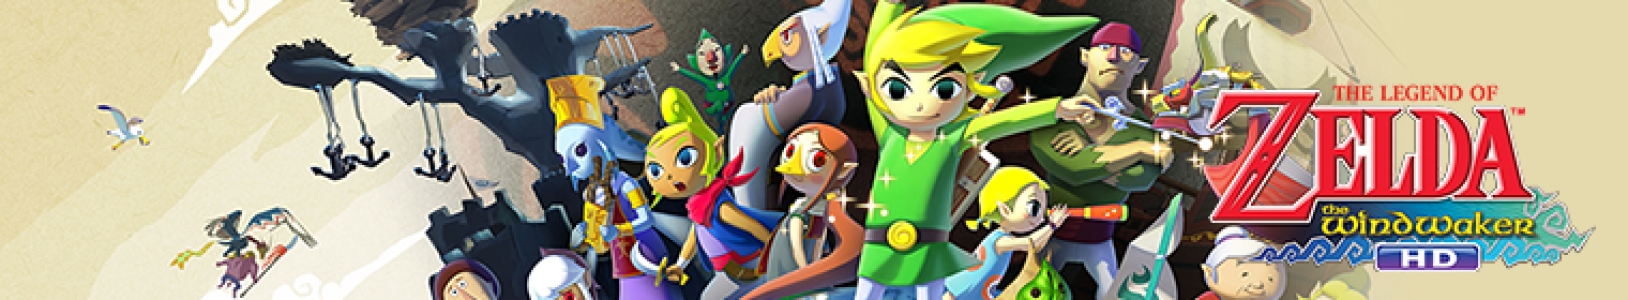 The Legend of Zelda: The Wind Waker HD banner